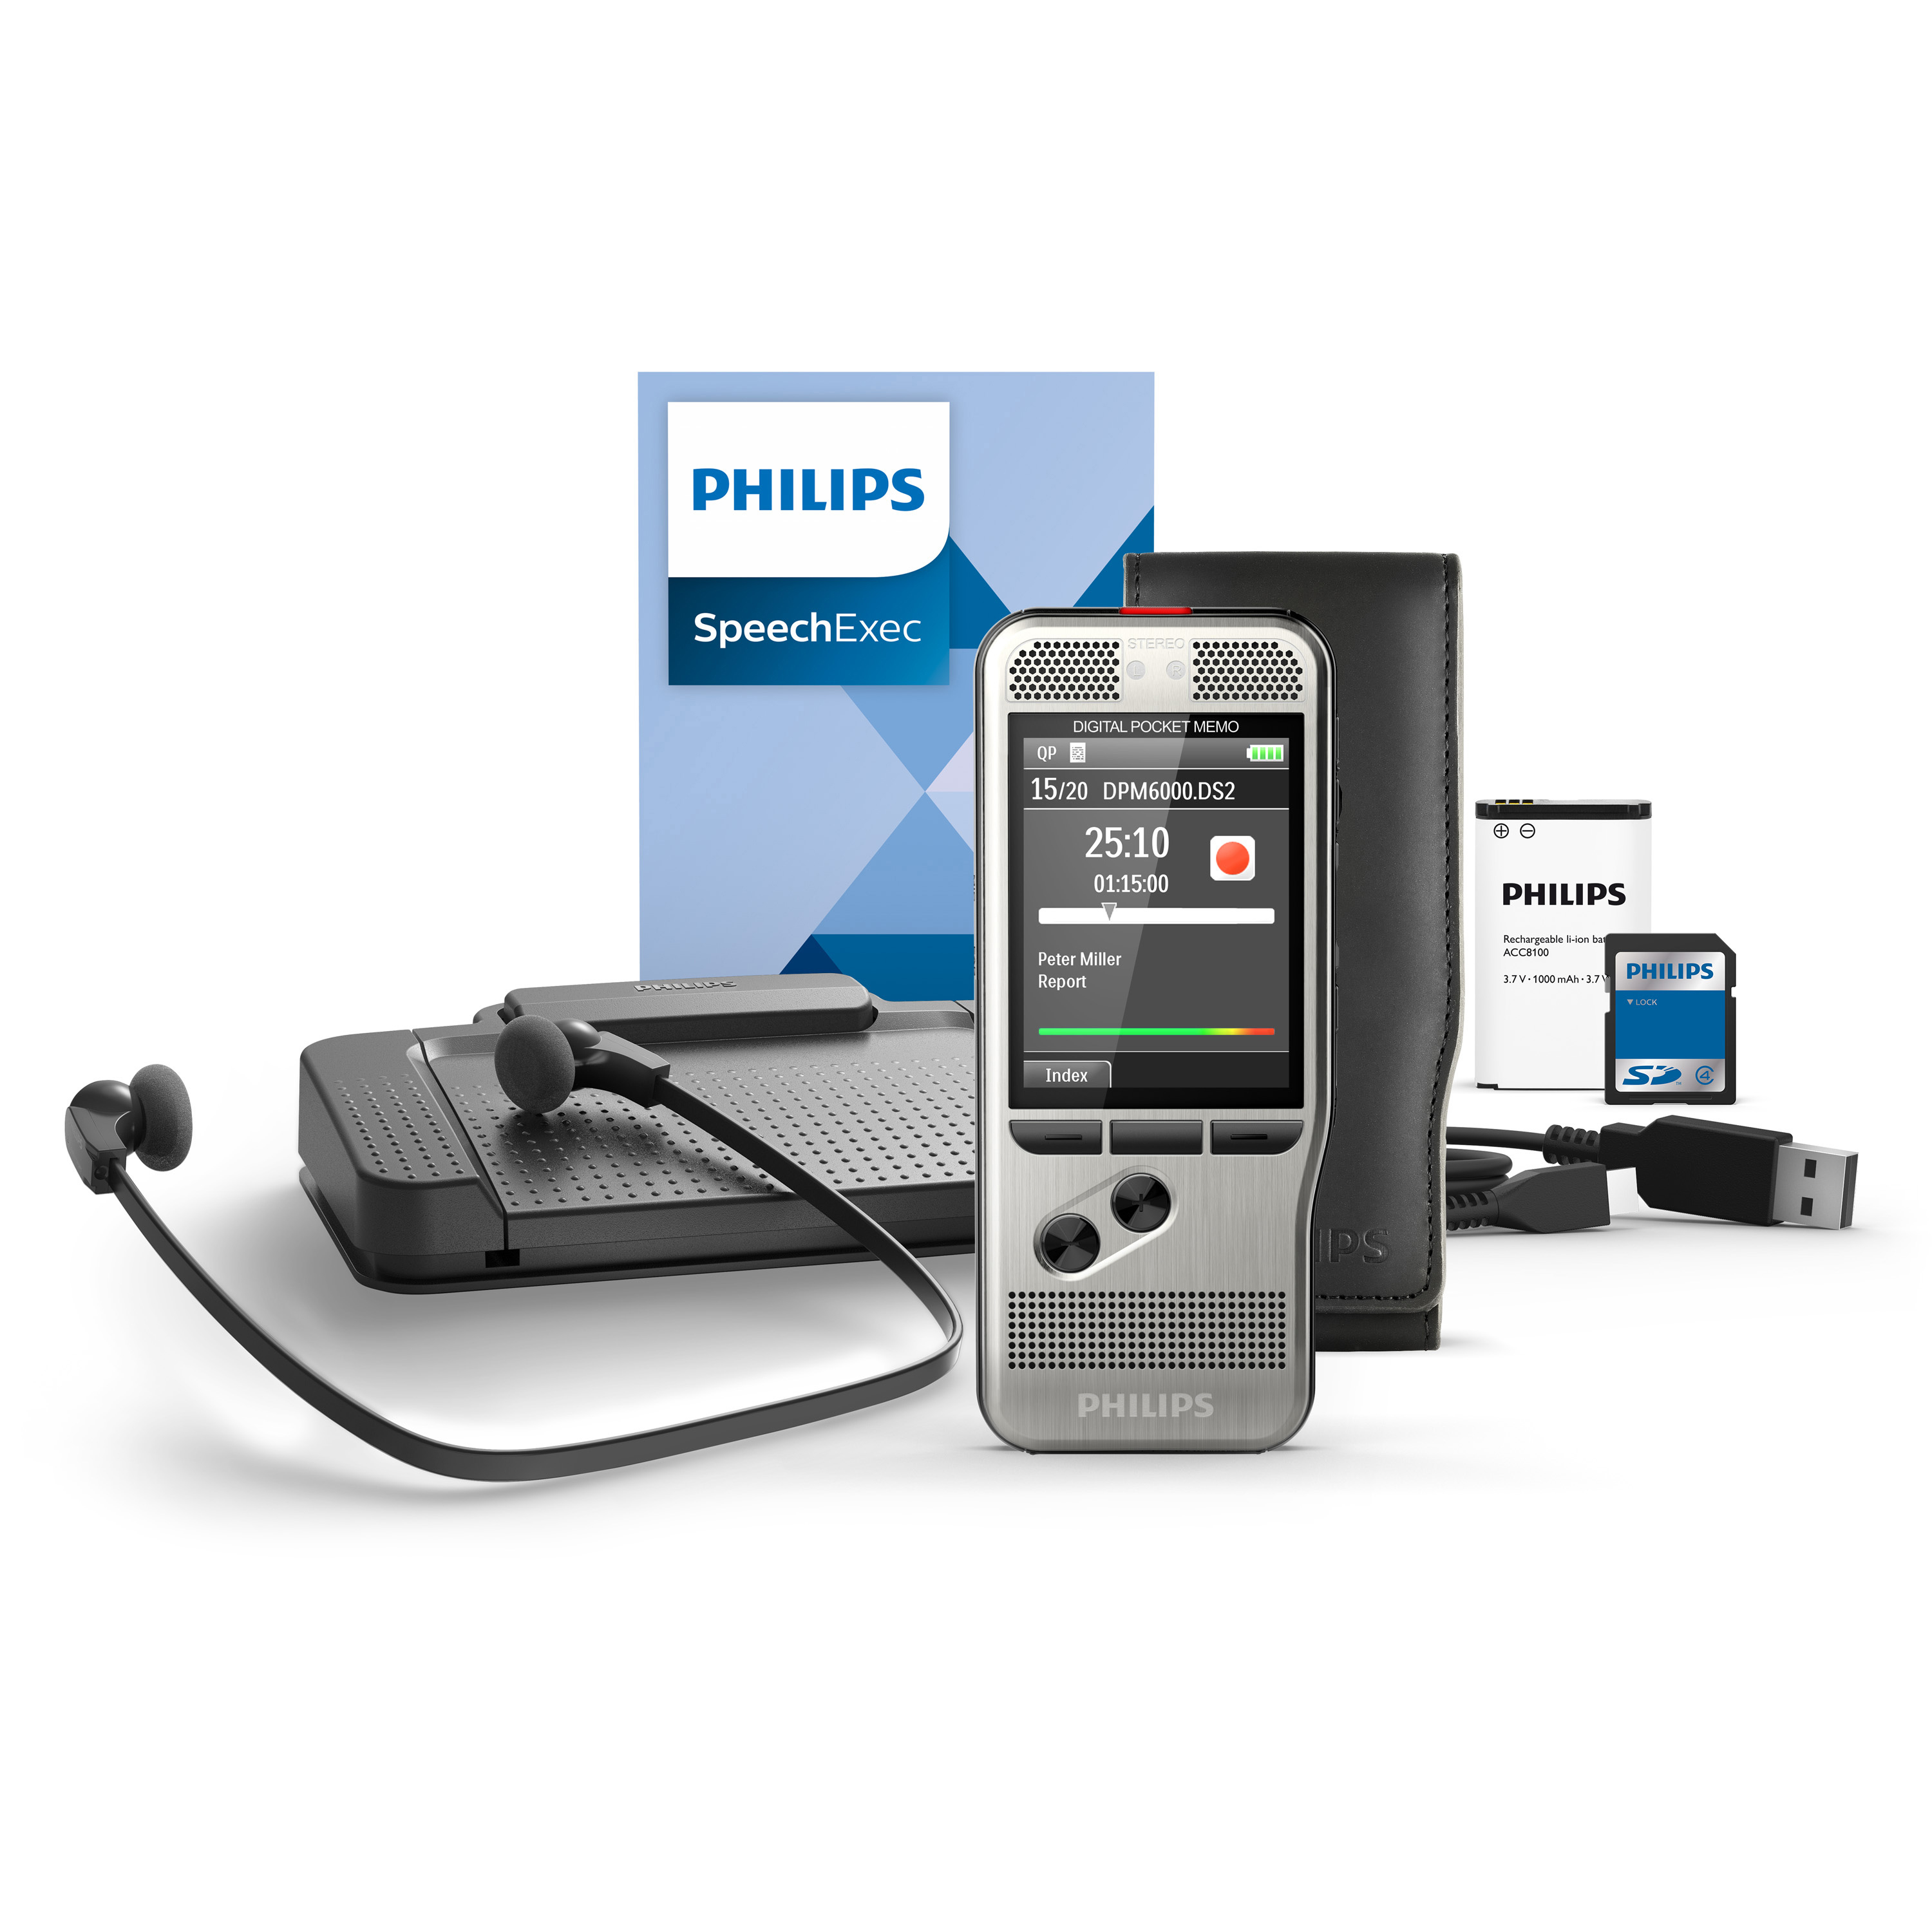 Philips Pocket Memo 6000 Digital Recorder, Push Button, 2GB, Silver - image 3 of 6